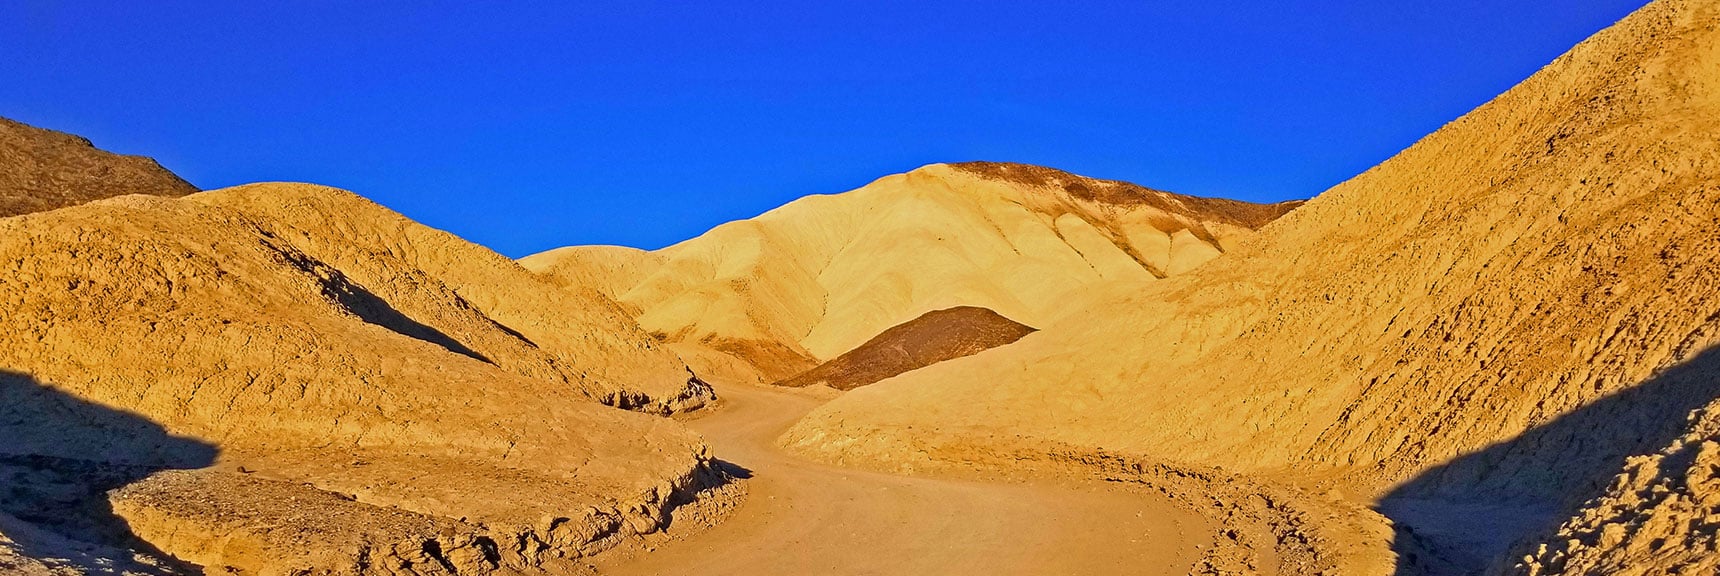 Twenty Mule Team Canyon | Death Valley National Park, California